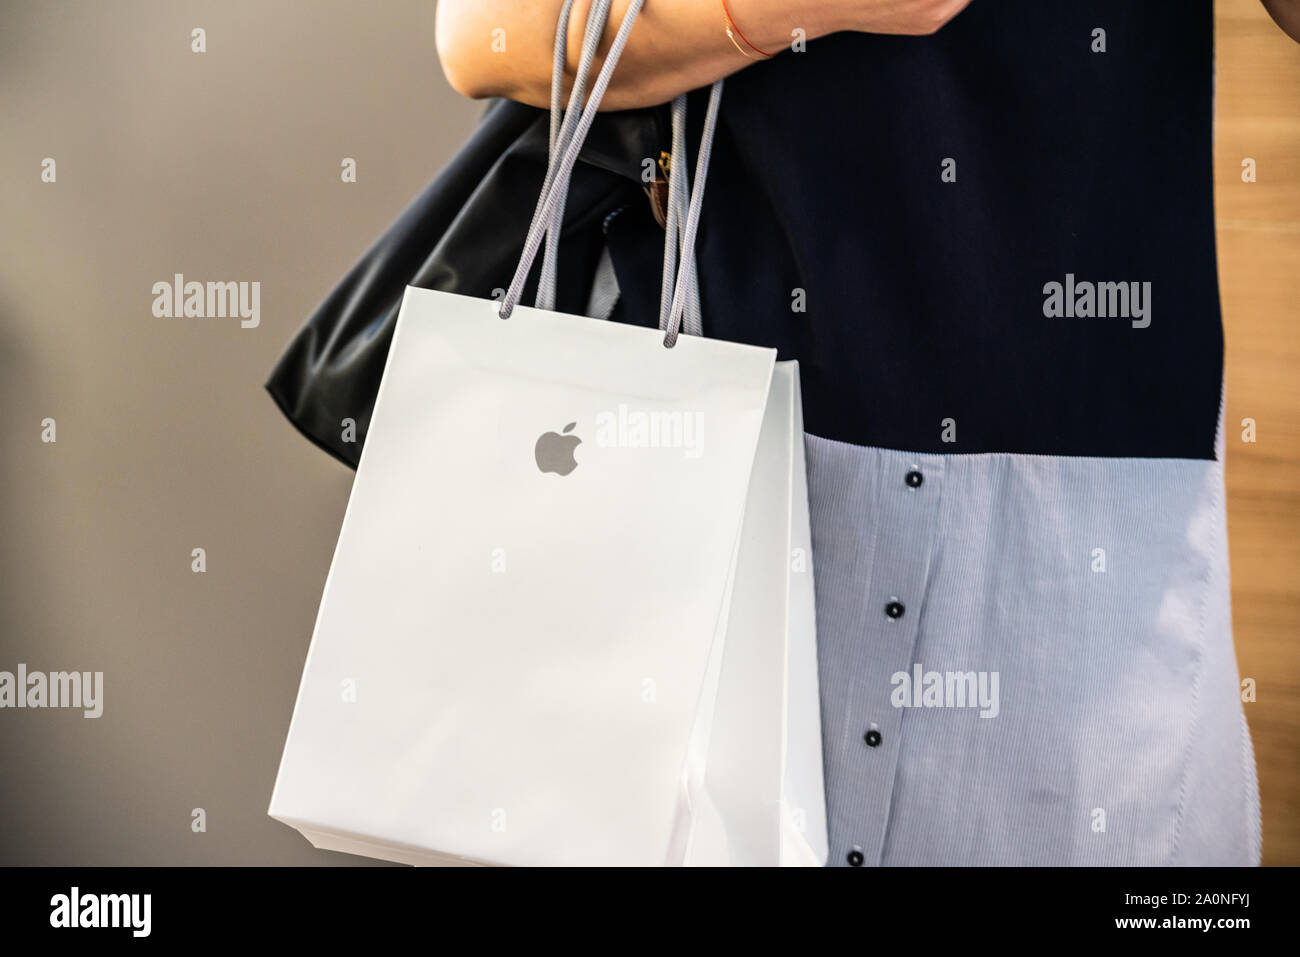 A female customer carries an Apple shopping bag at an Apple retail